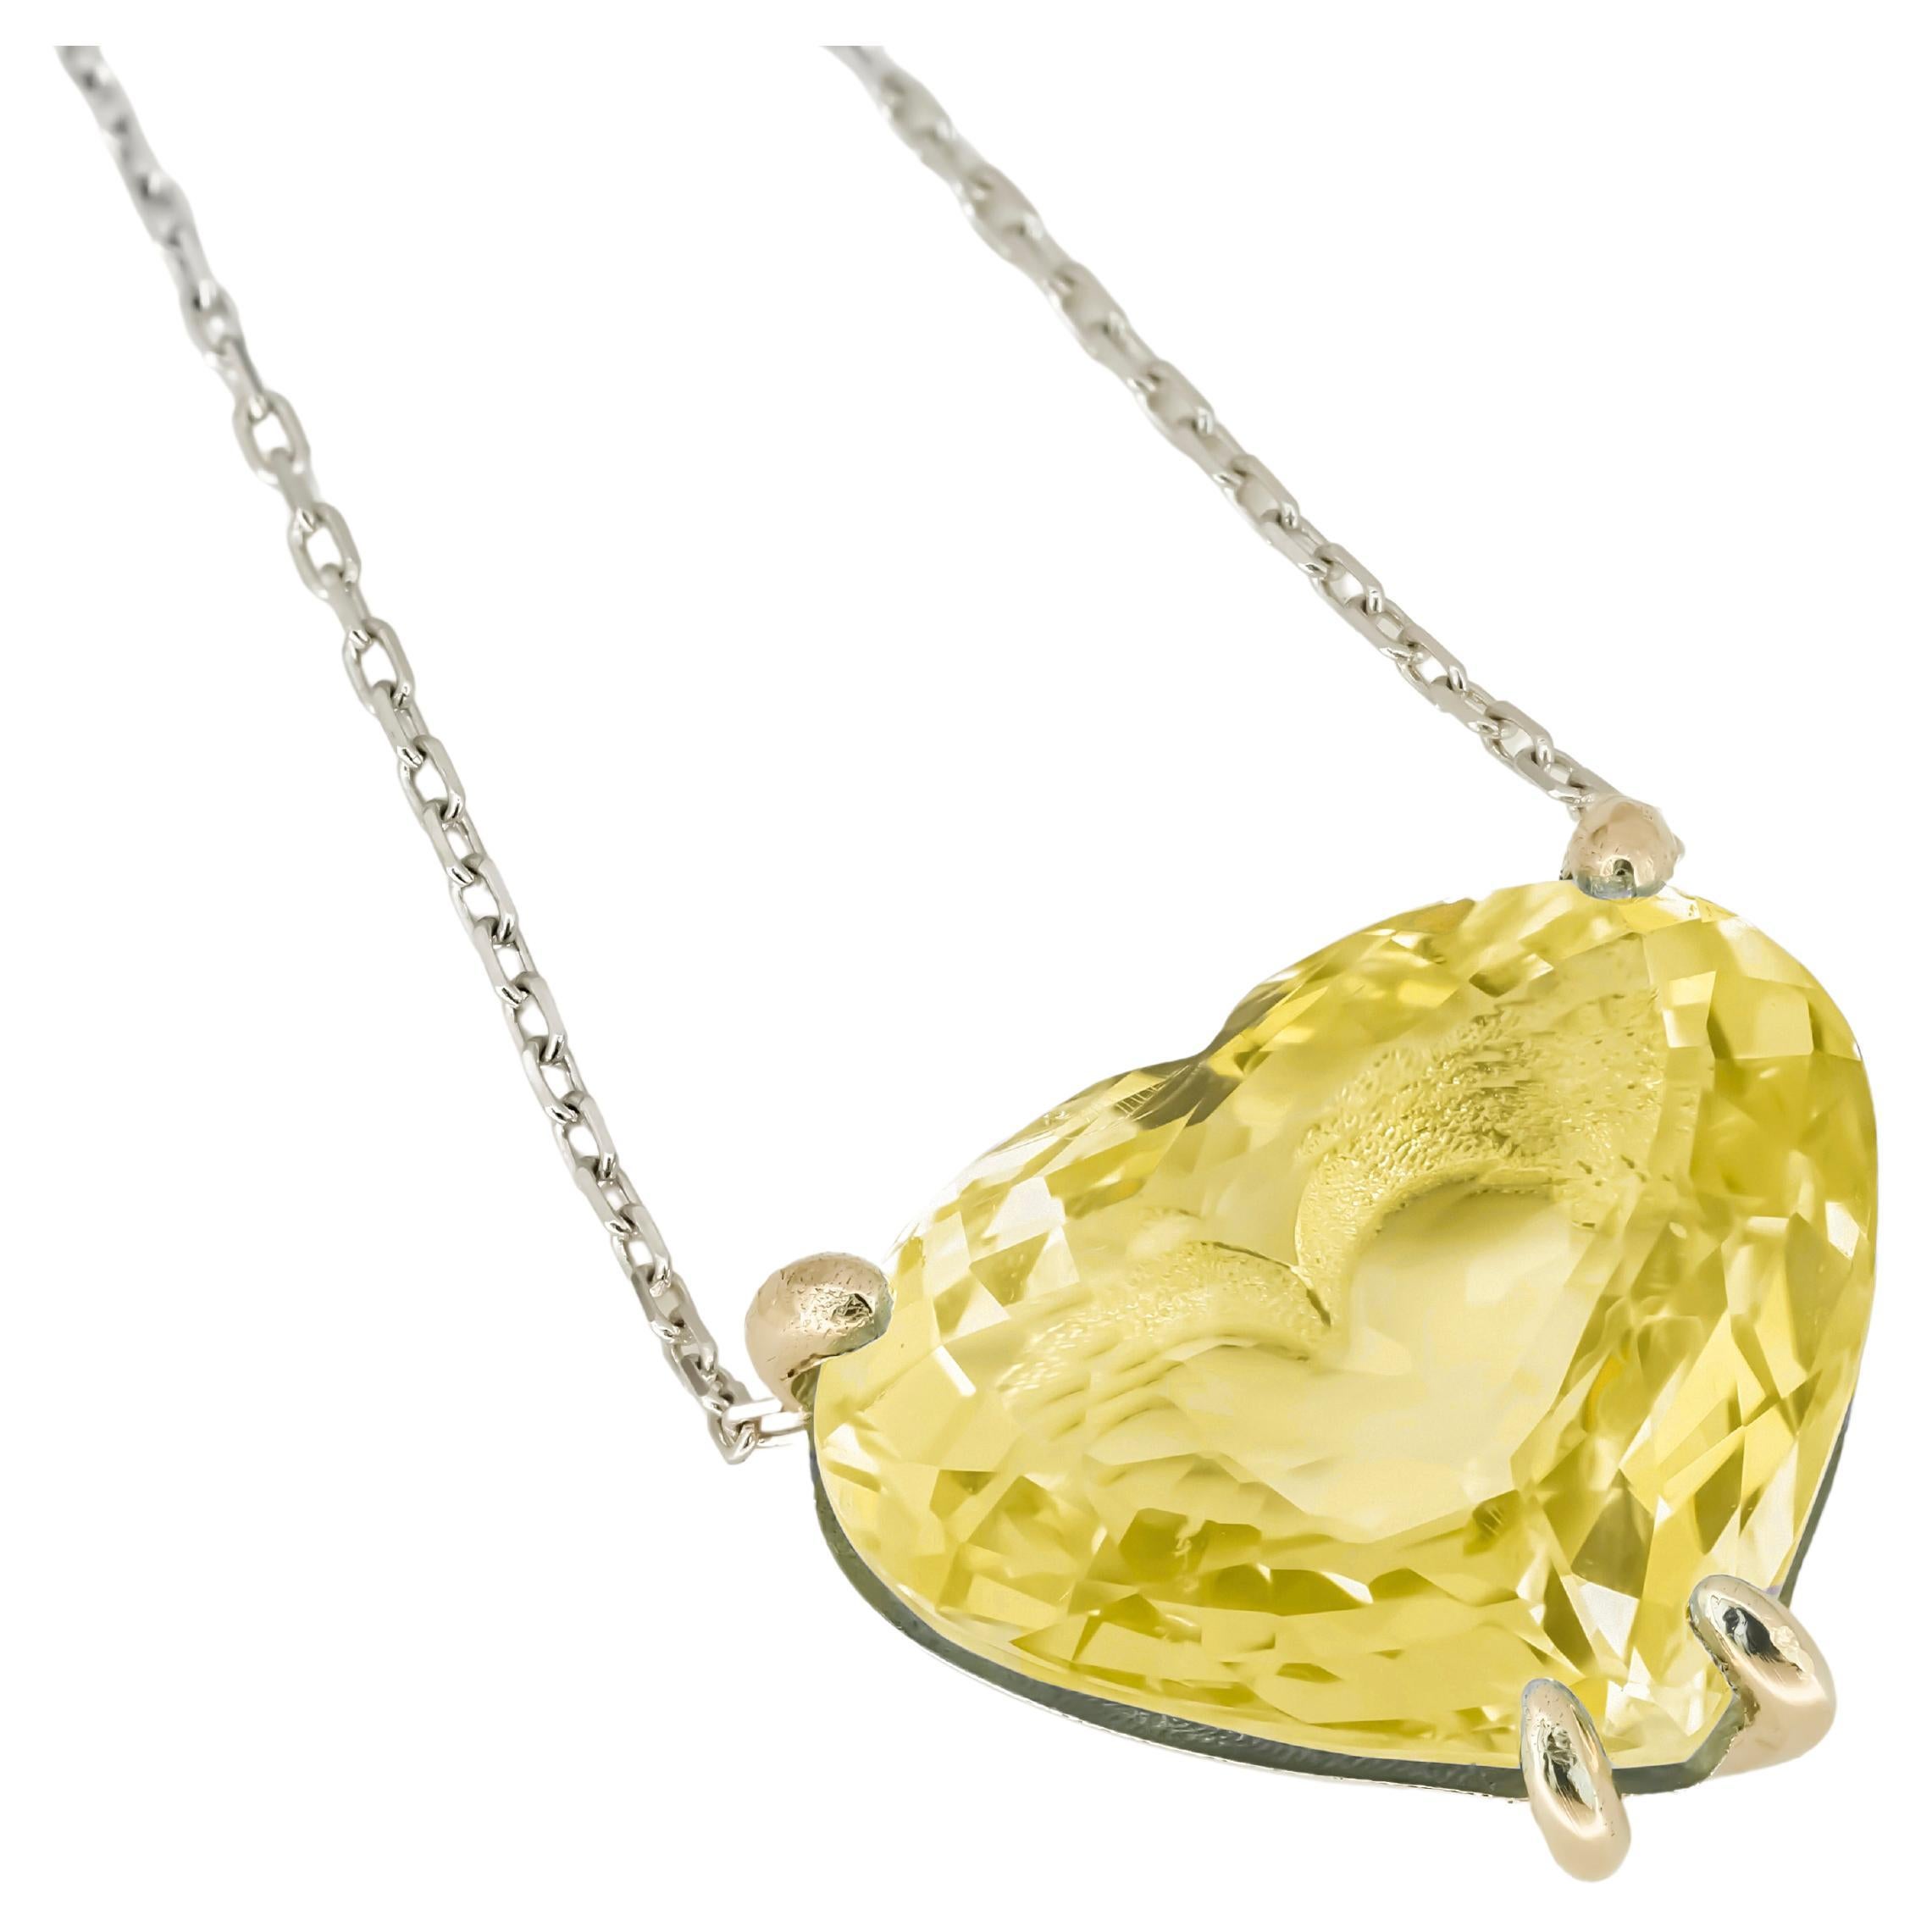 Collier avec pendentif en citrine en forme de cœur en or 14k. 